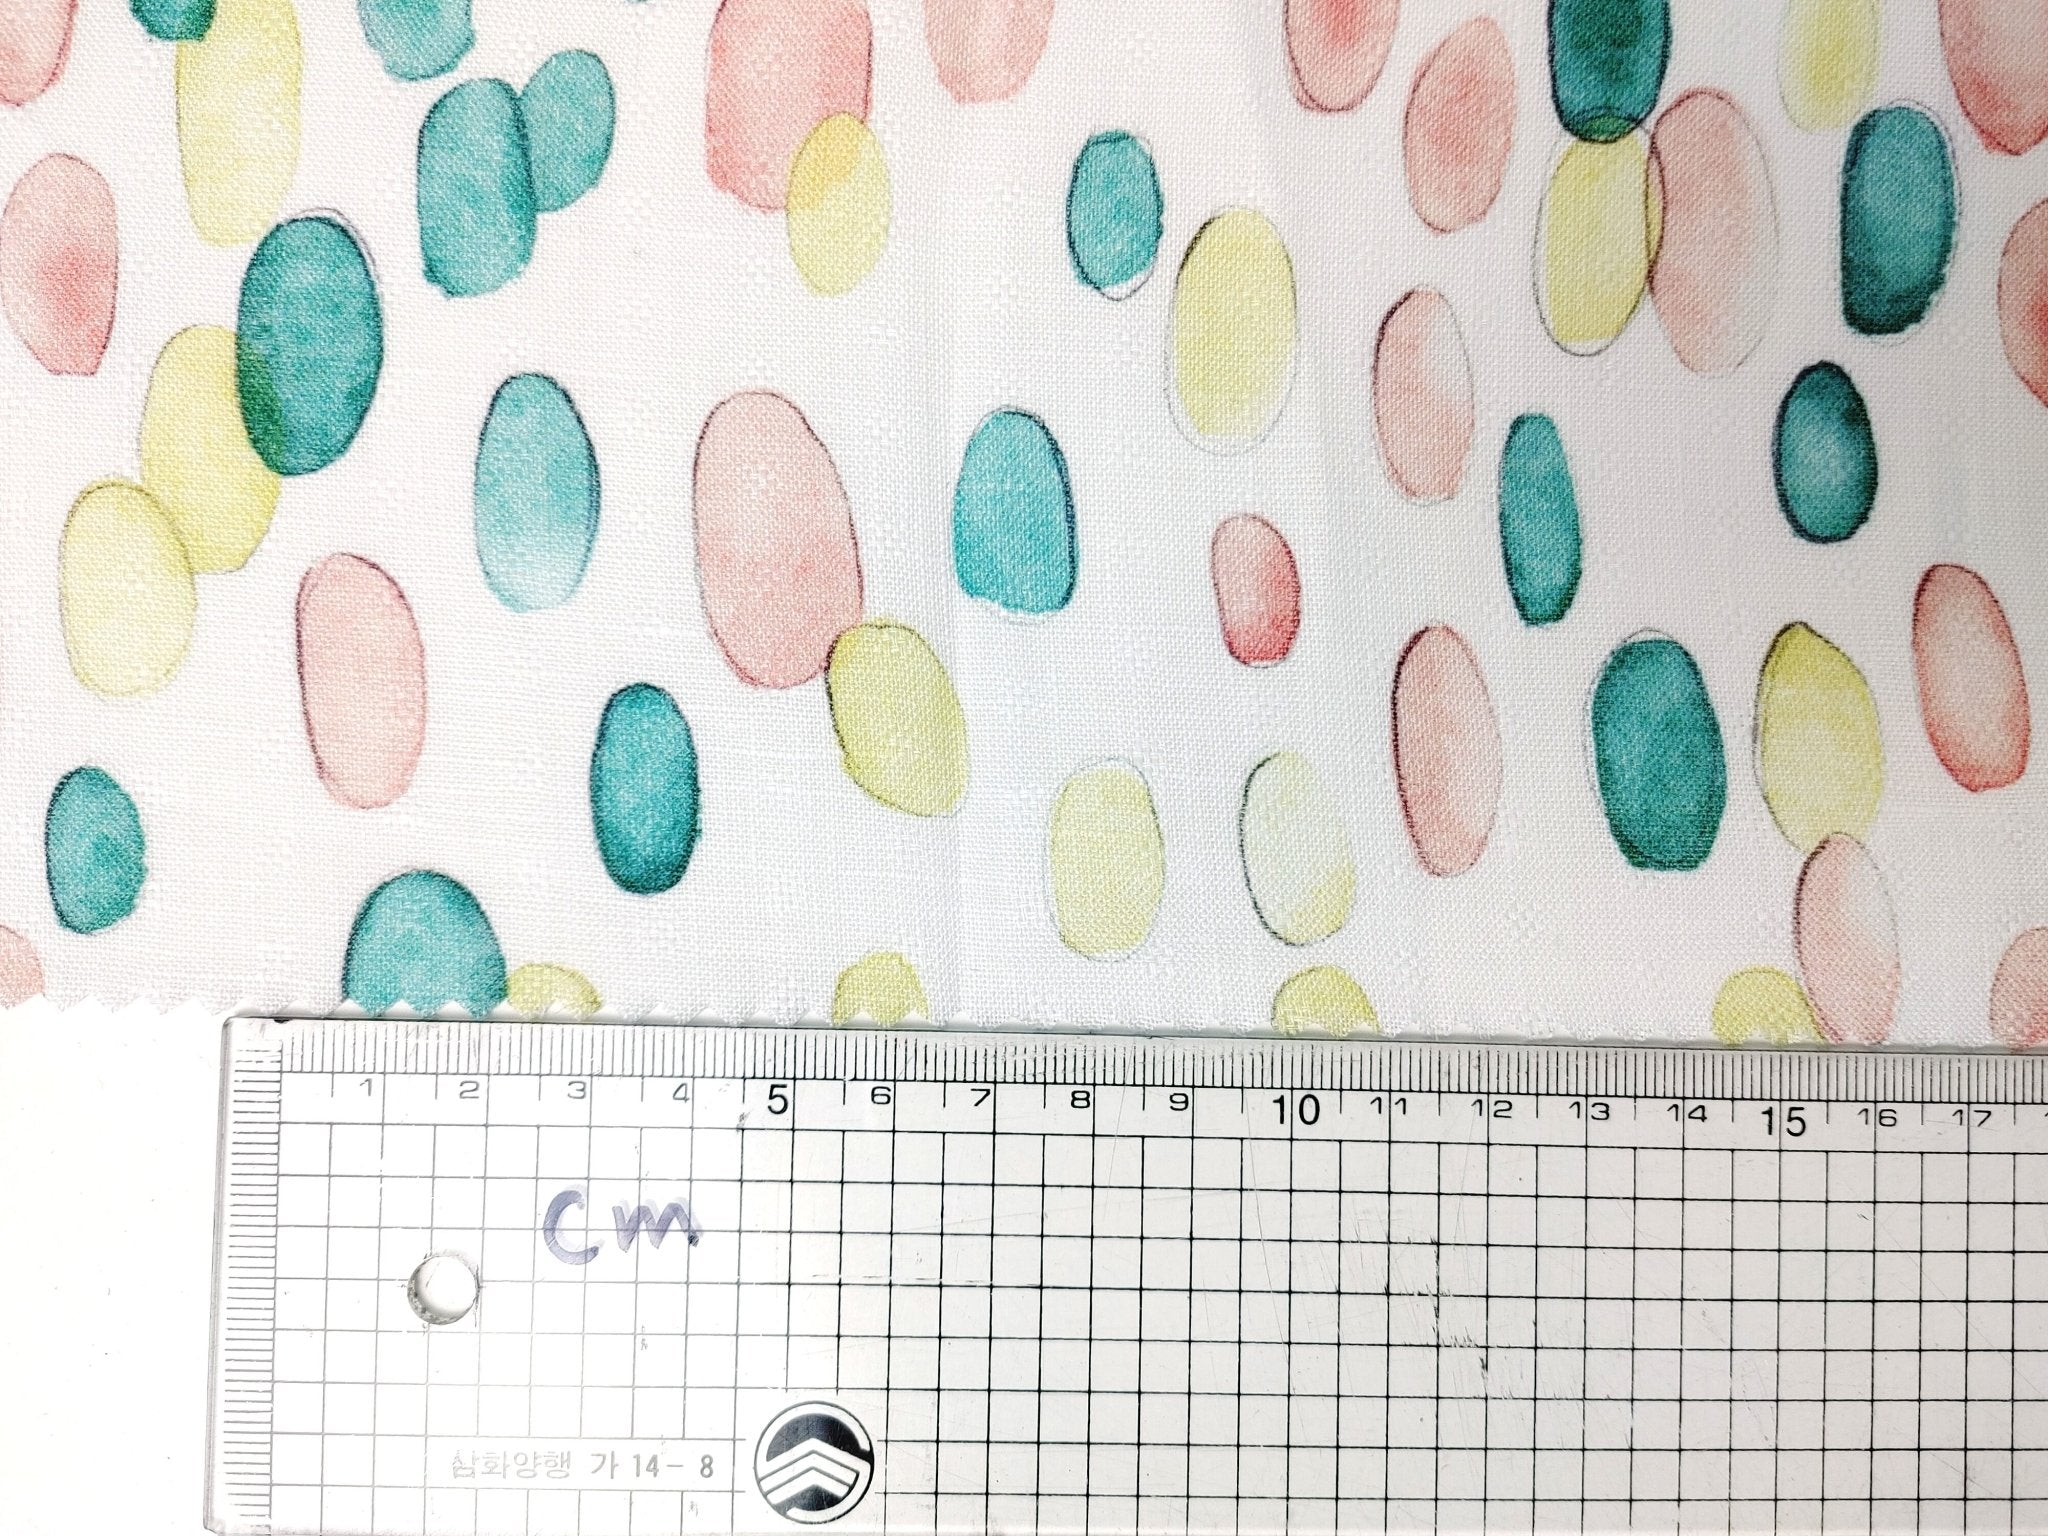 100% Linen Oval Print Fabric Light Weight 7684 - The Linen Lab - Multi